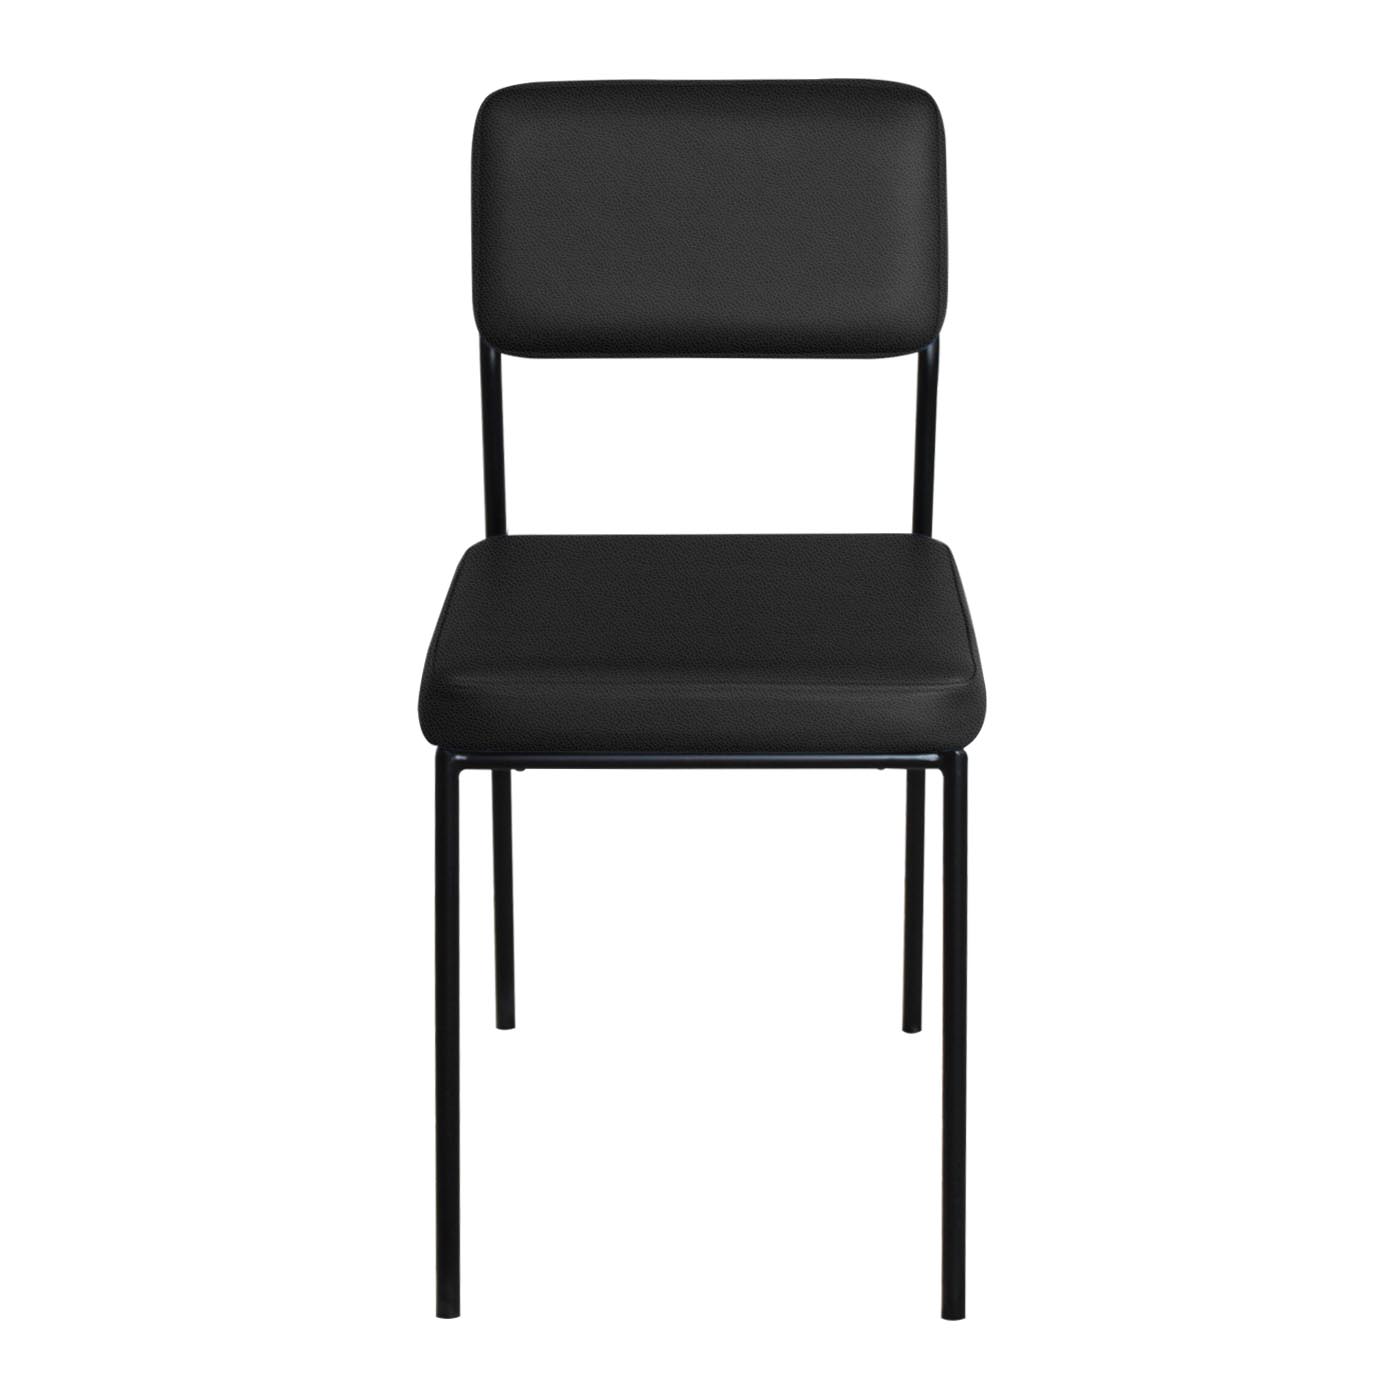 Dessau Textured Black Visitors Chair